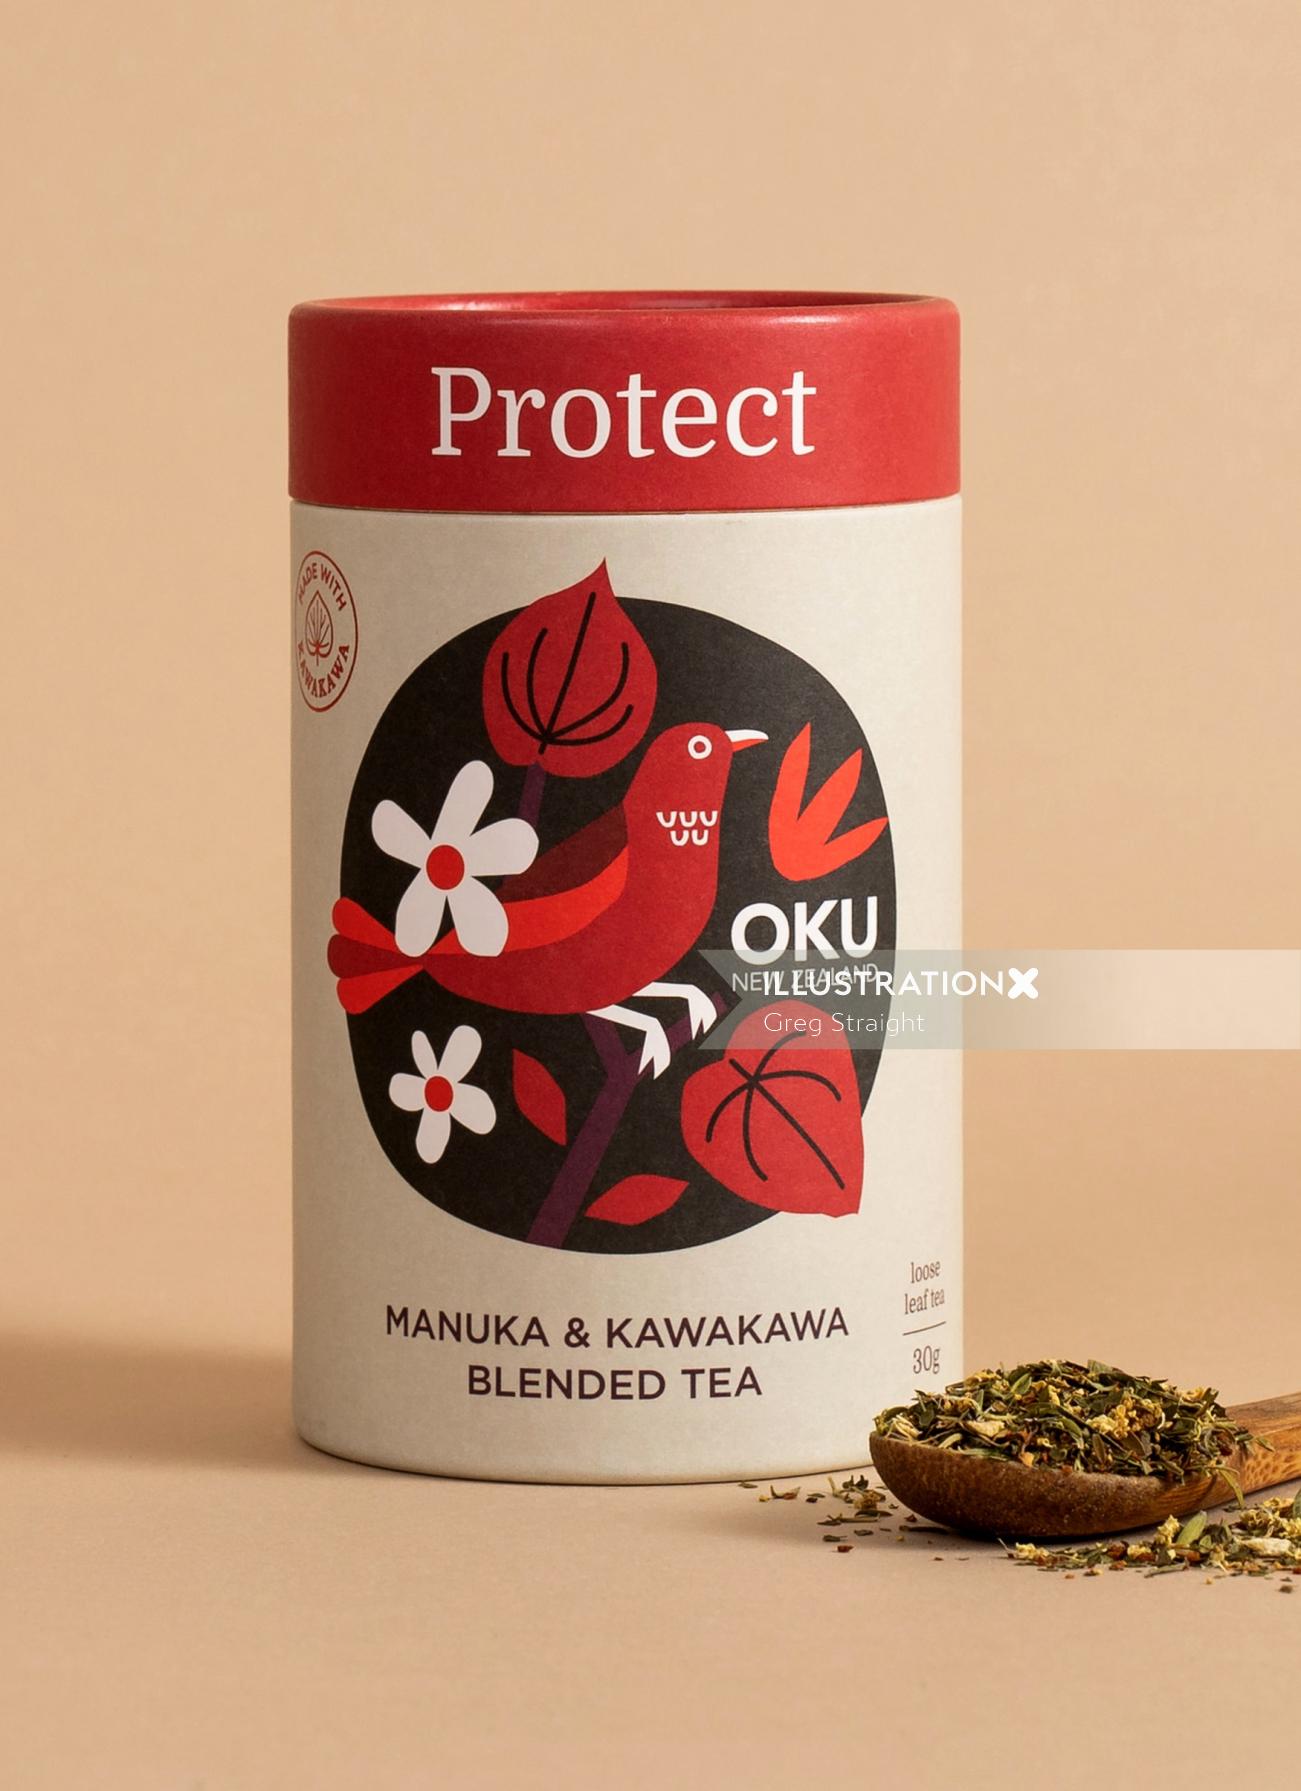 Packaging illustration of Manuka & Kawakawa blended tea